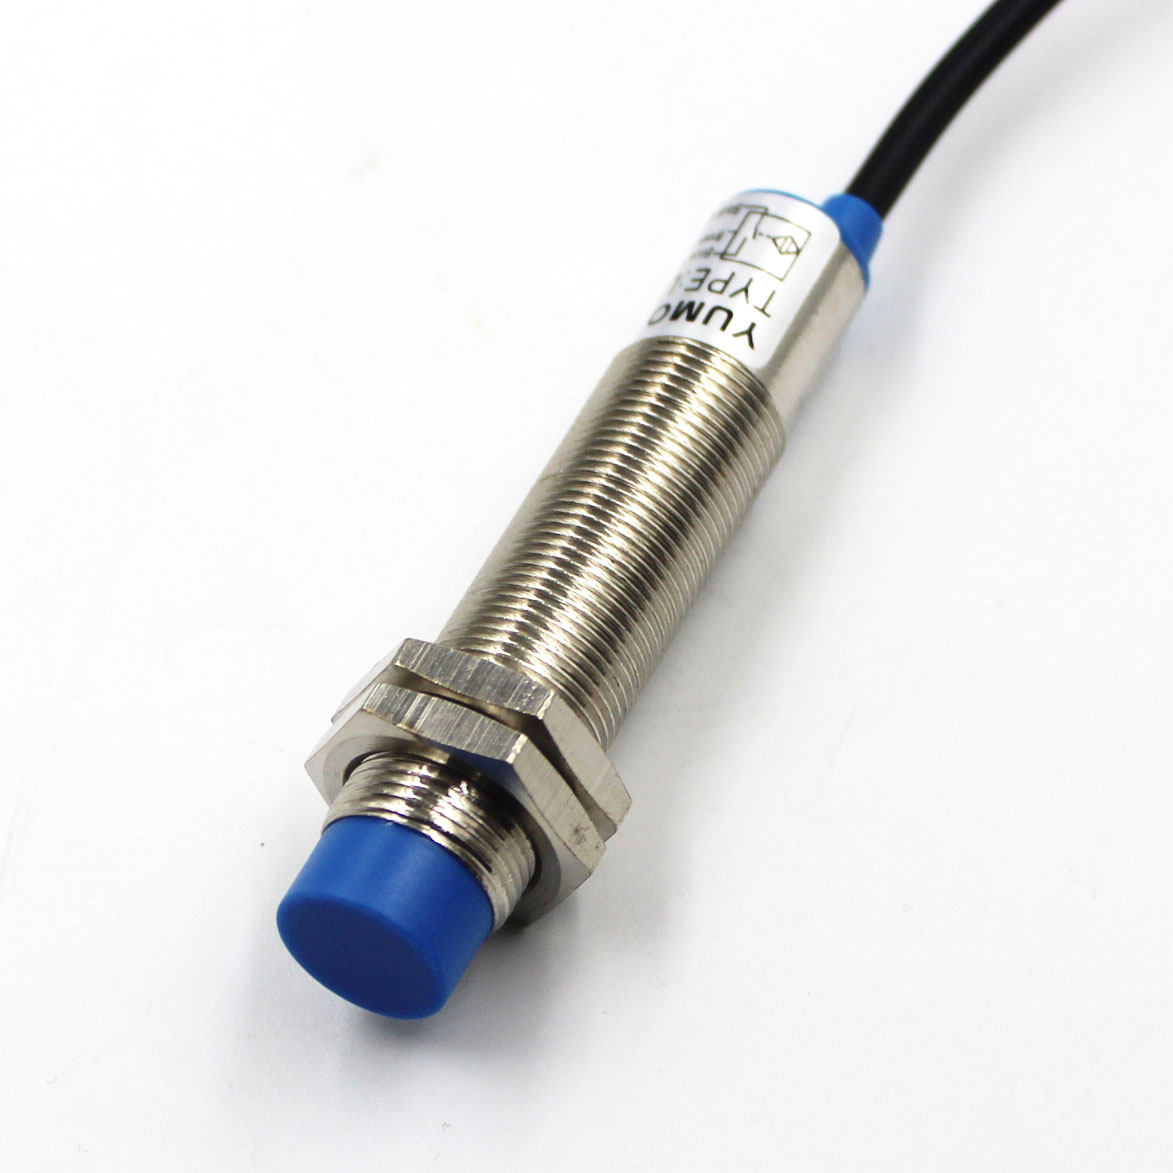 Proximity Switch Optical Metal Inductive Proximity Sensor LM14-3005NB 